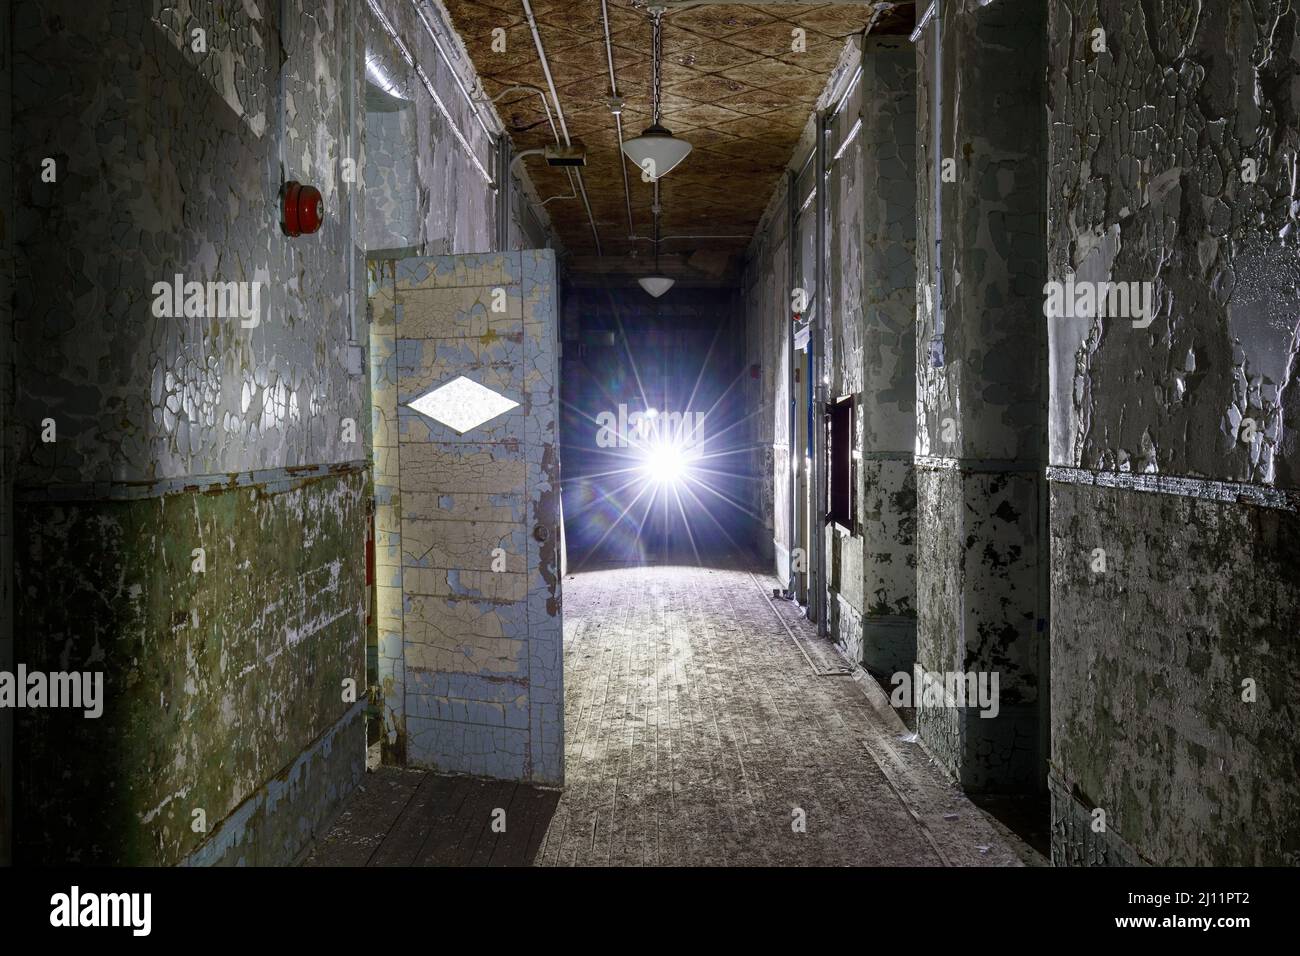 Hallway inside an abandoned asylum with moody lighting. Stock Photo